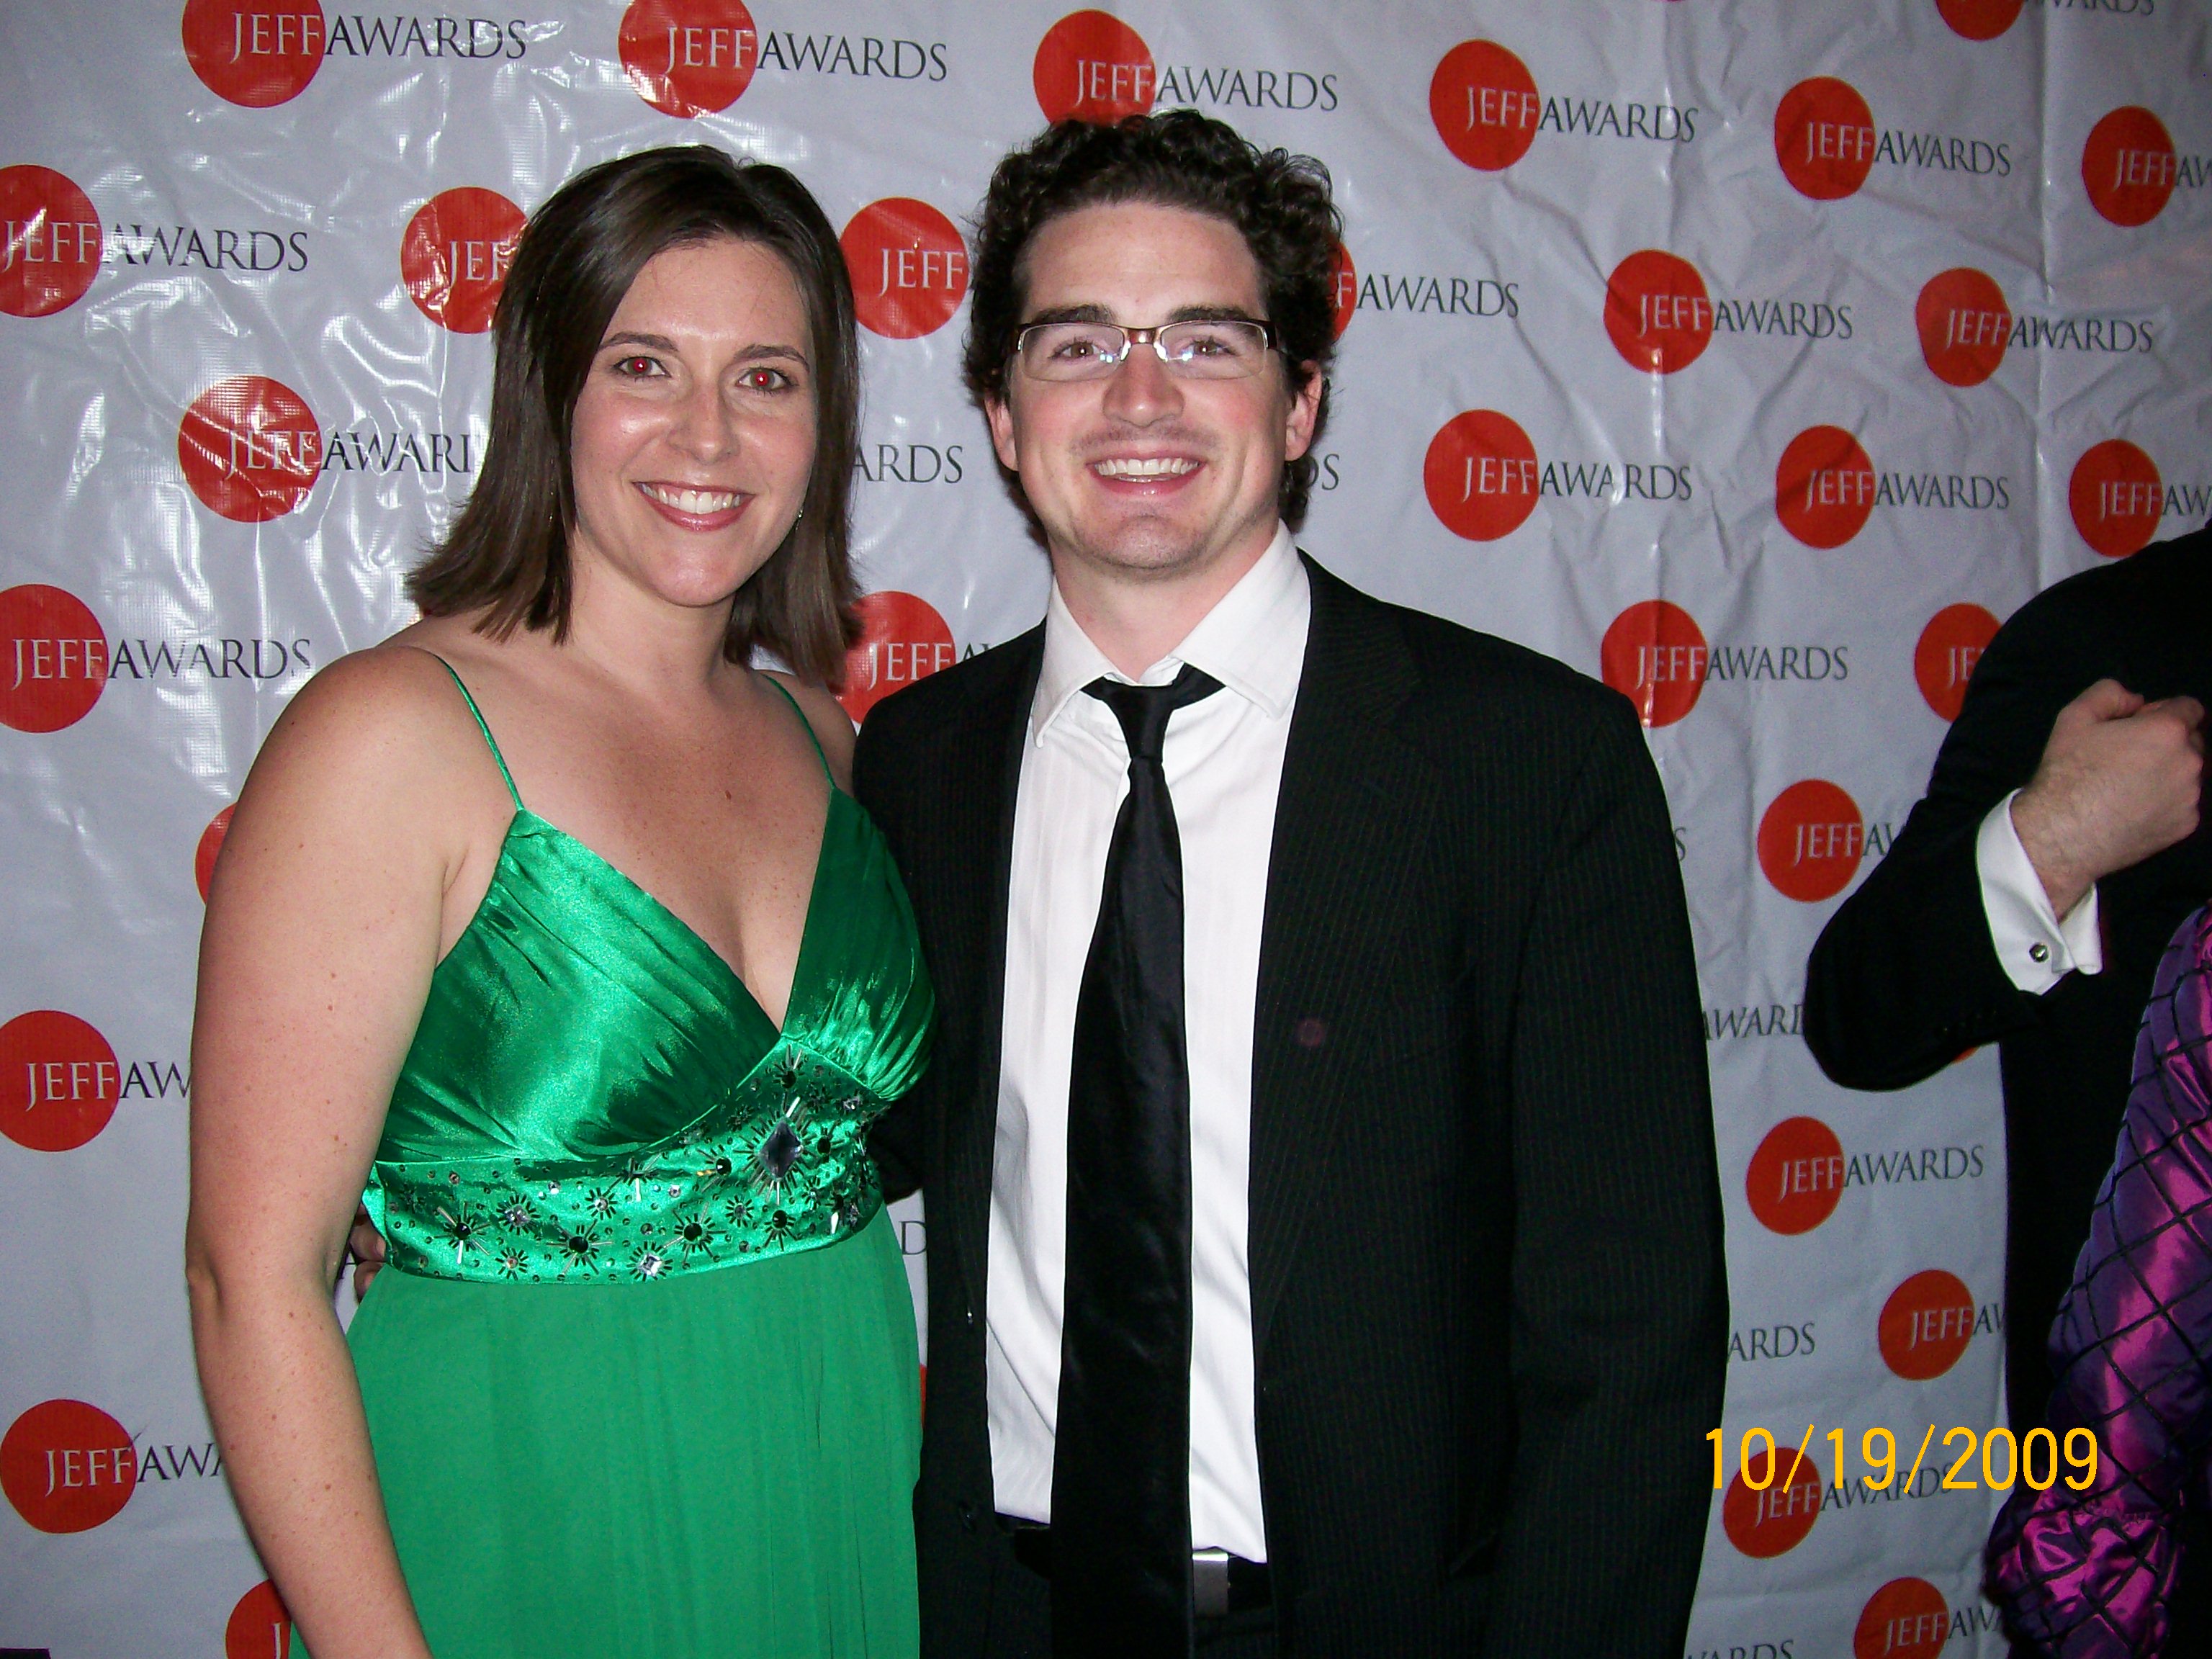 Jeff Awards 2009